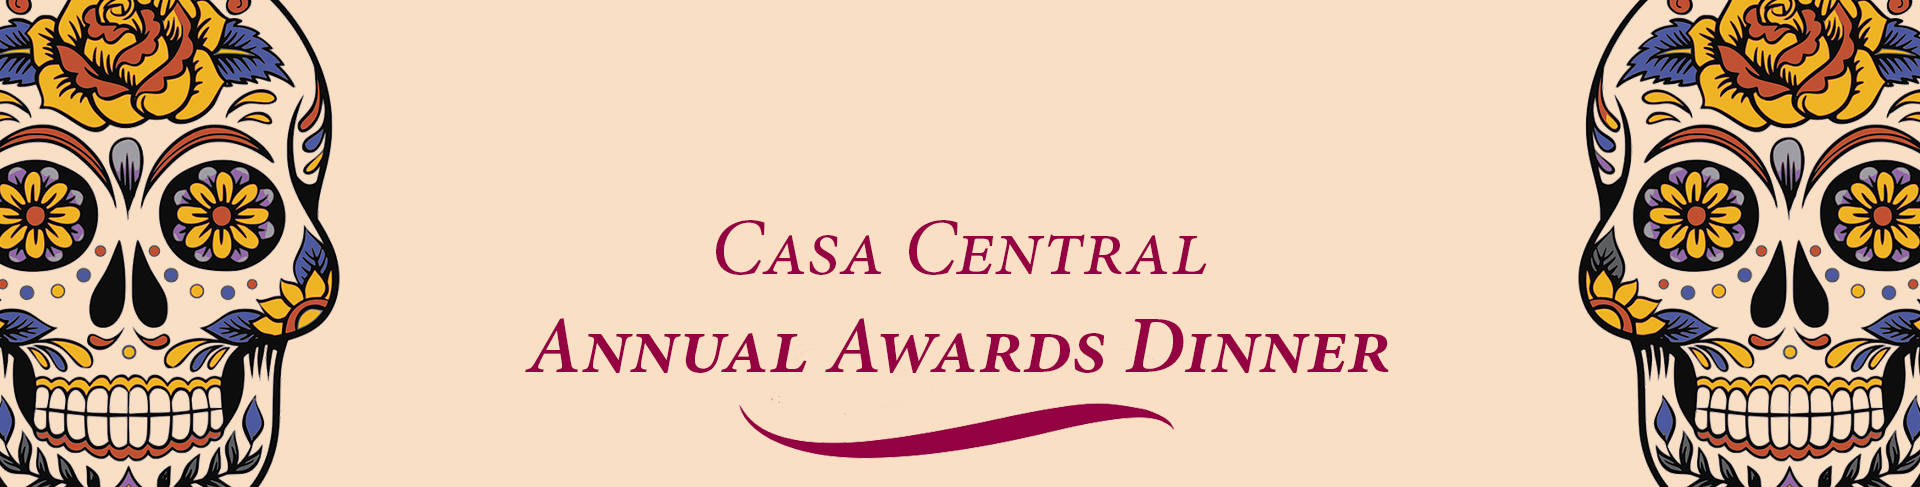 Casa Central Annual Awards Dinner